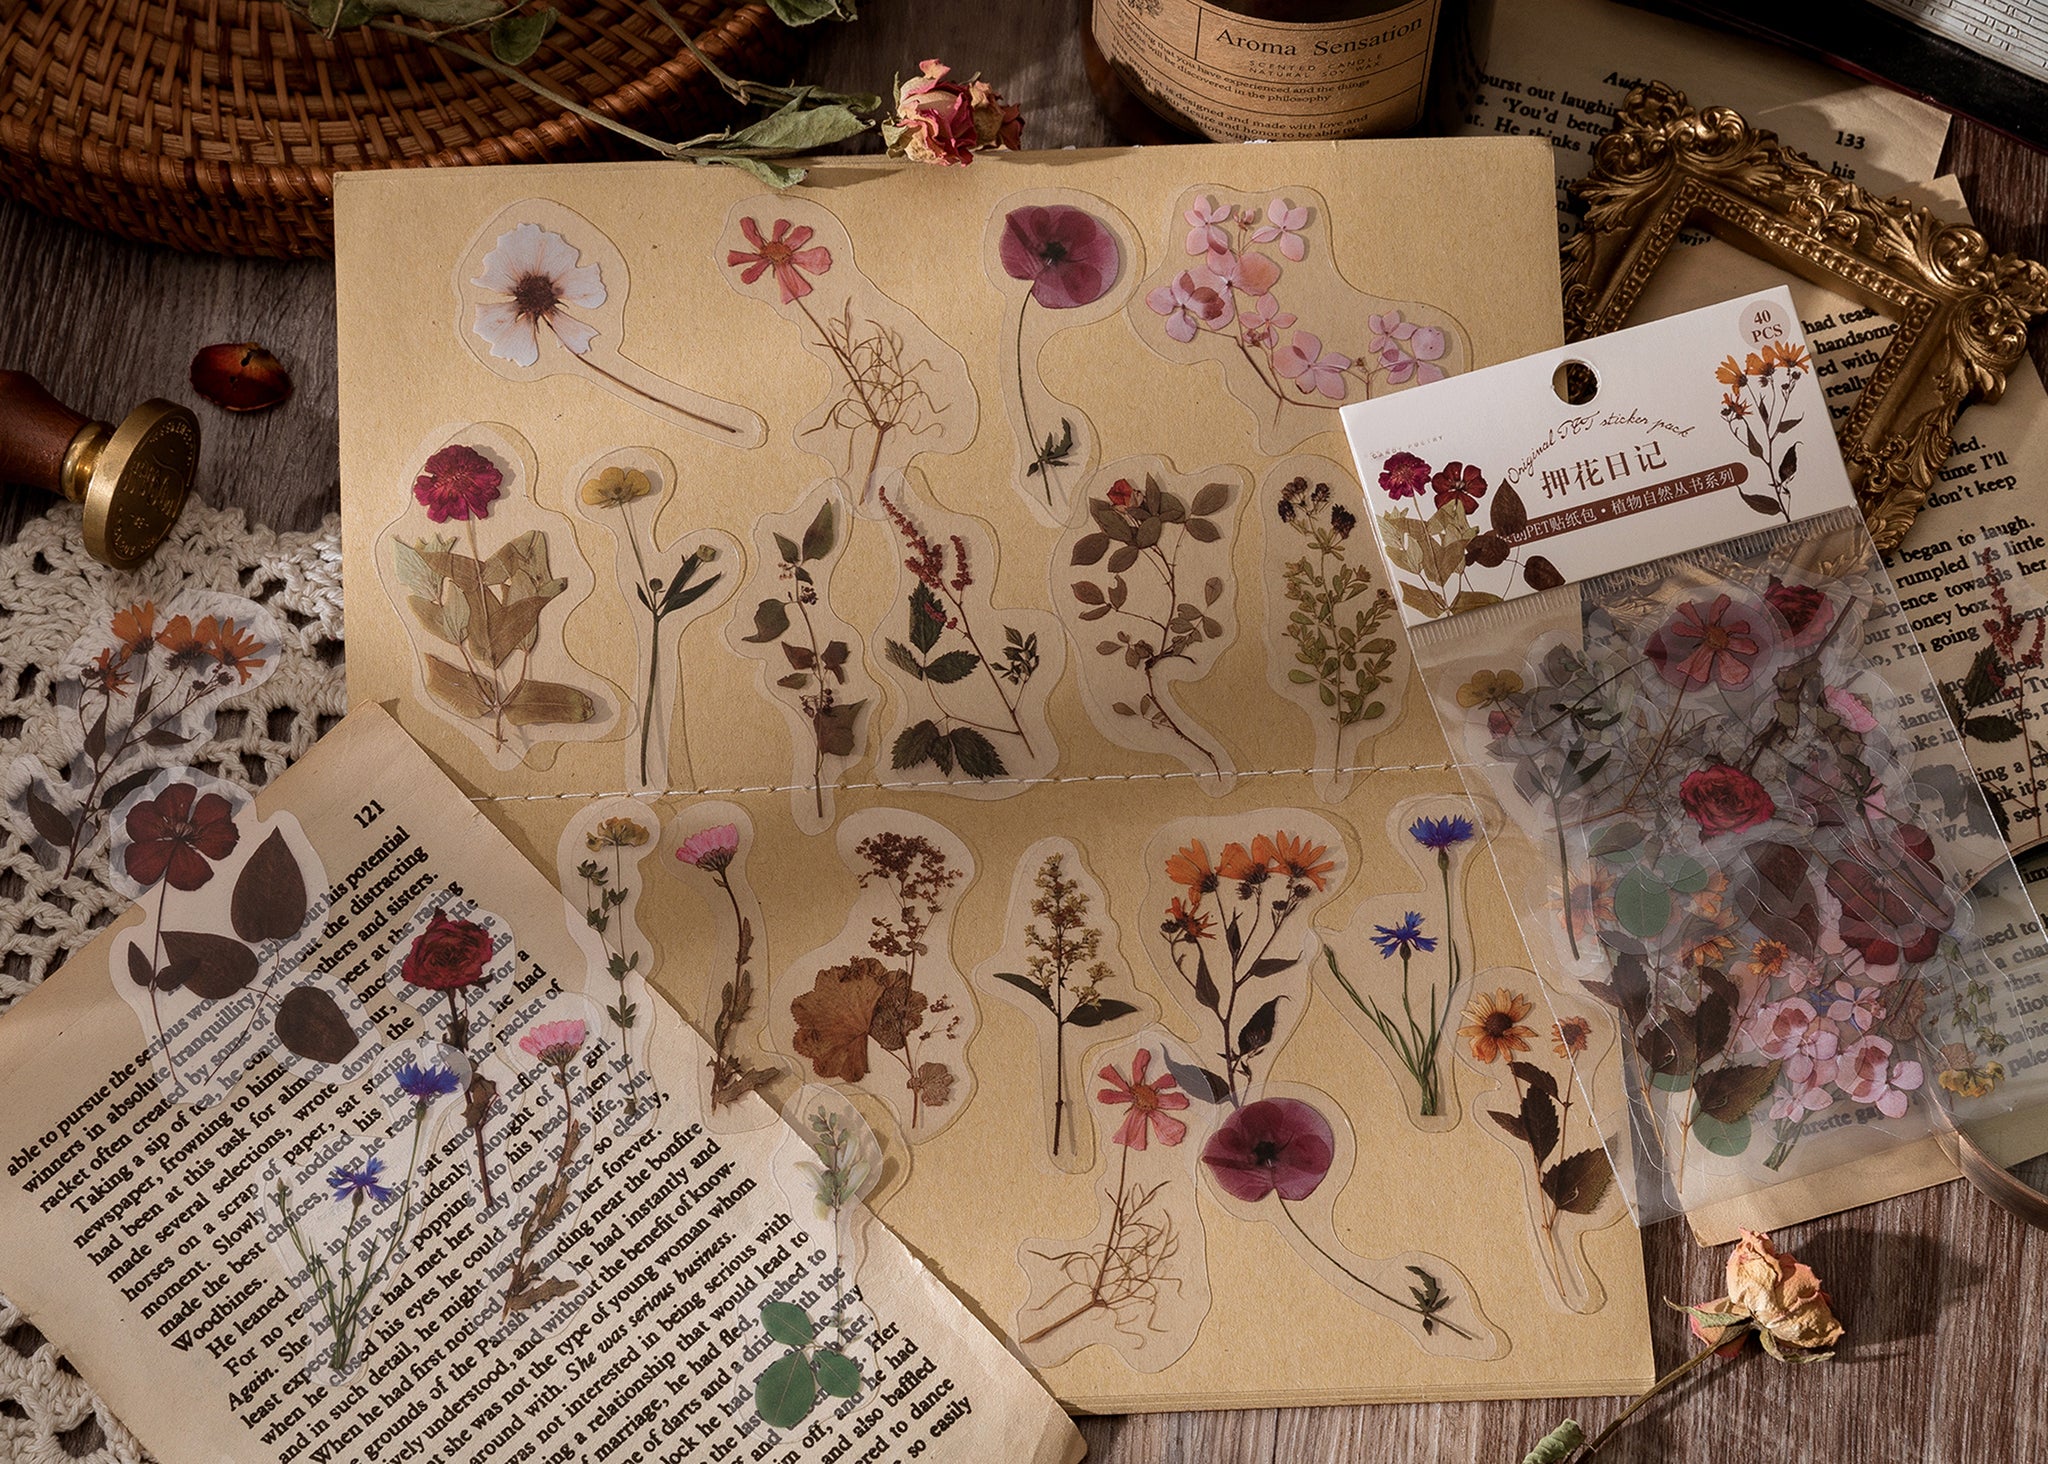 Knaid Flower Stickers Set (360 Pieces) - Decorative Colorful Assorted Floral Sticker for Scrapbooking, Kid DIY Arts Crafts, Album, Bullet Journals